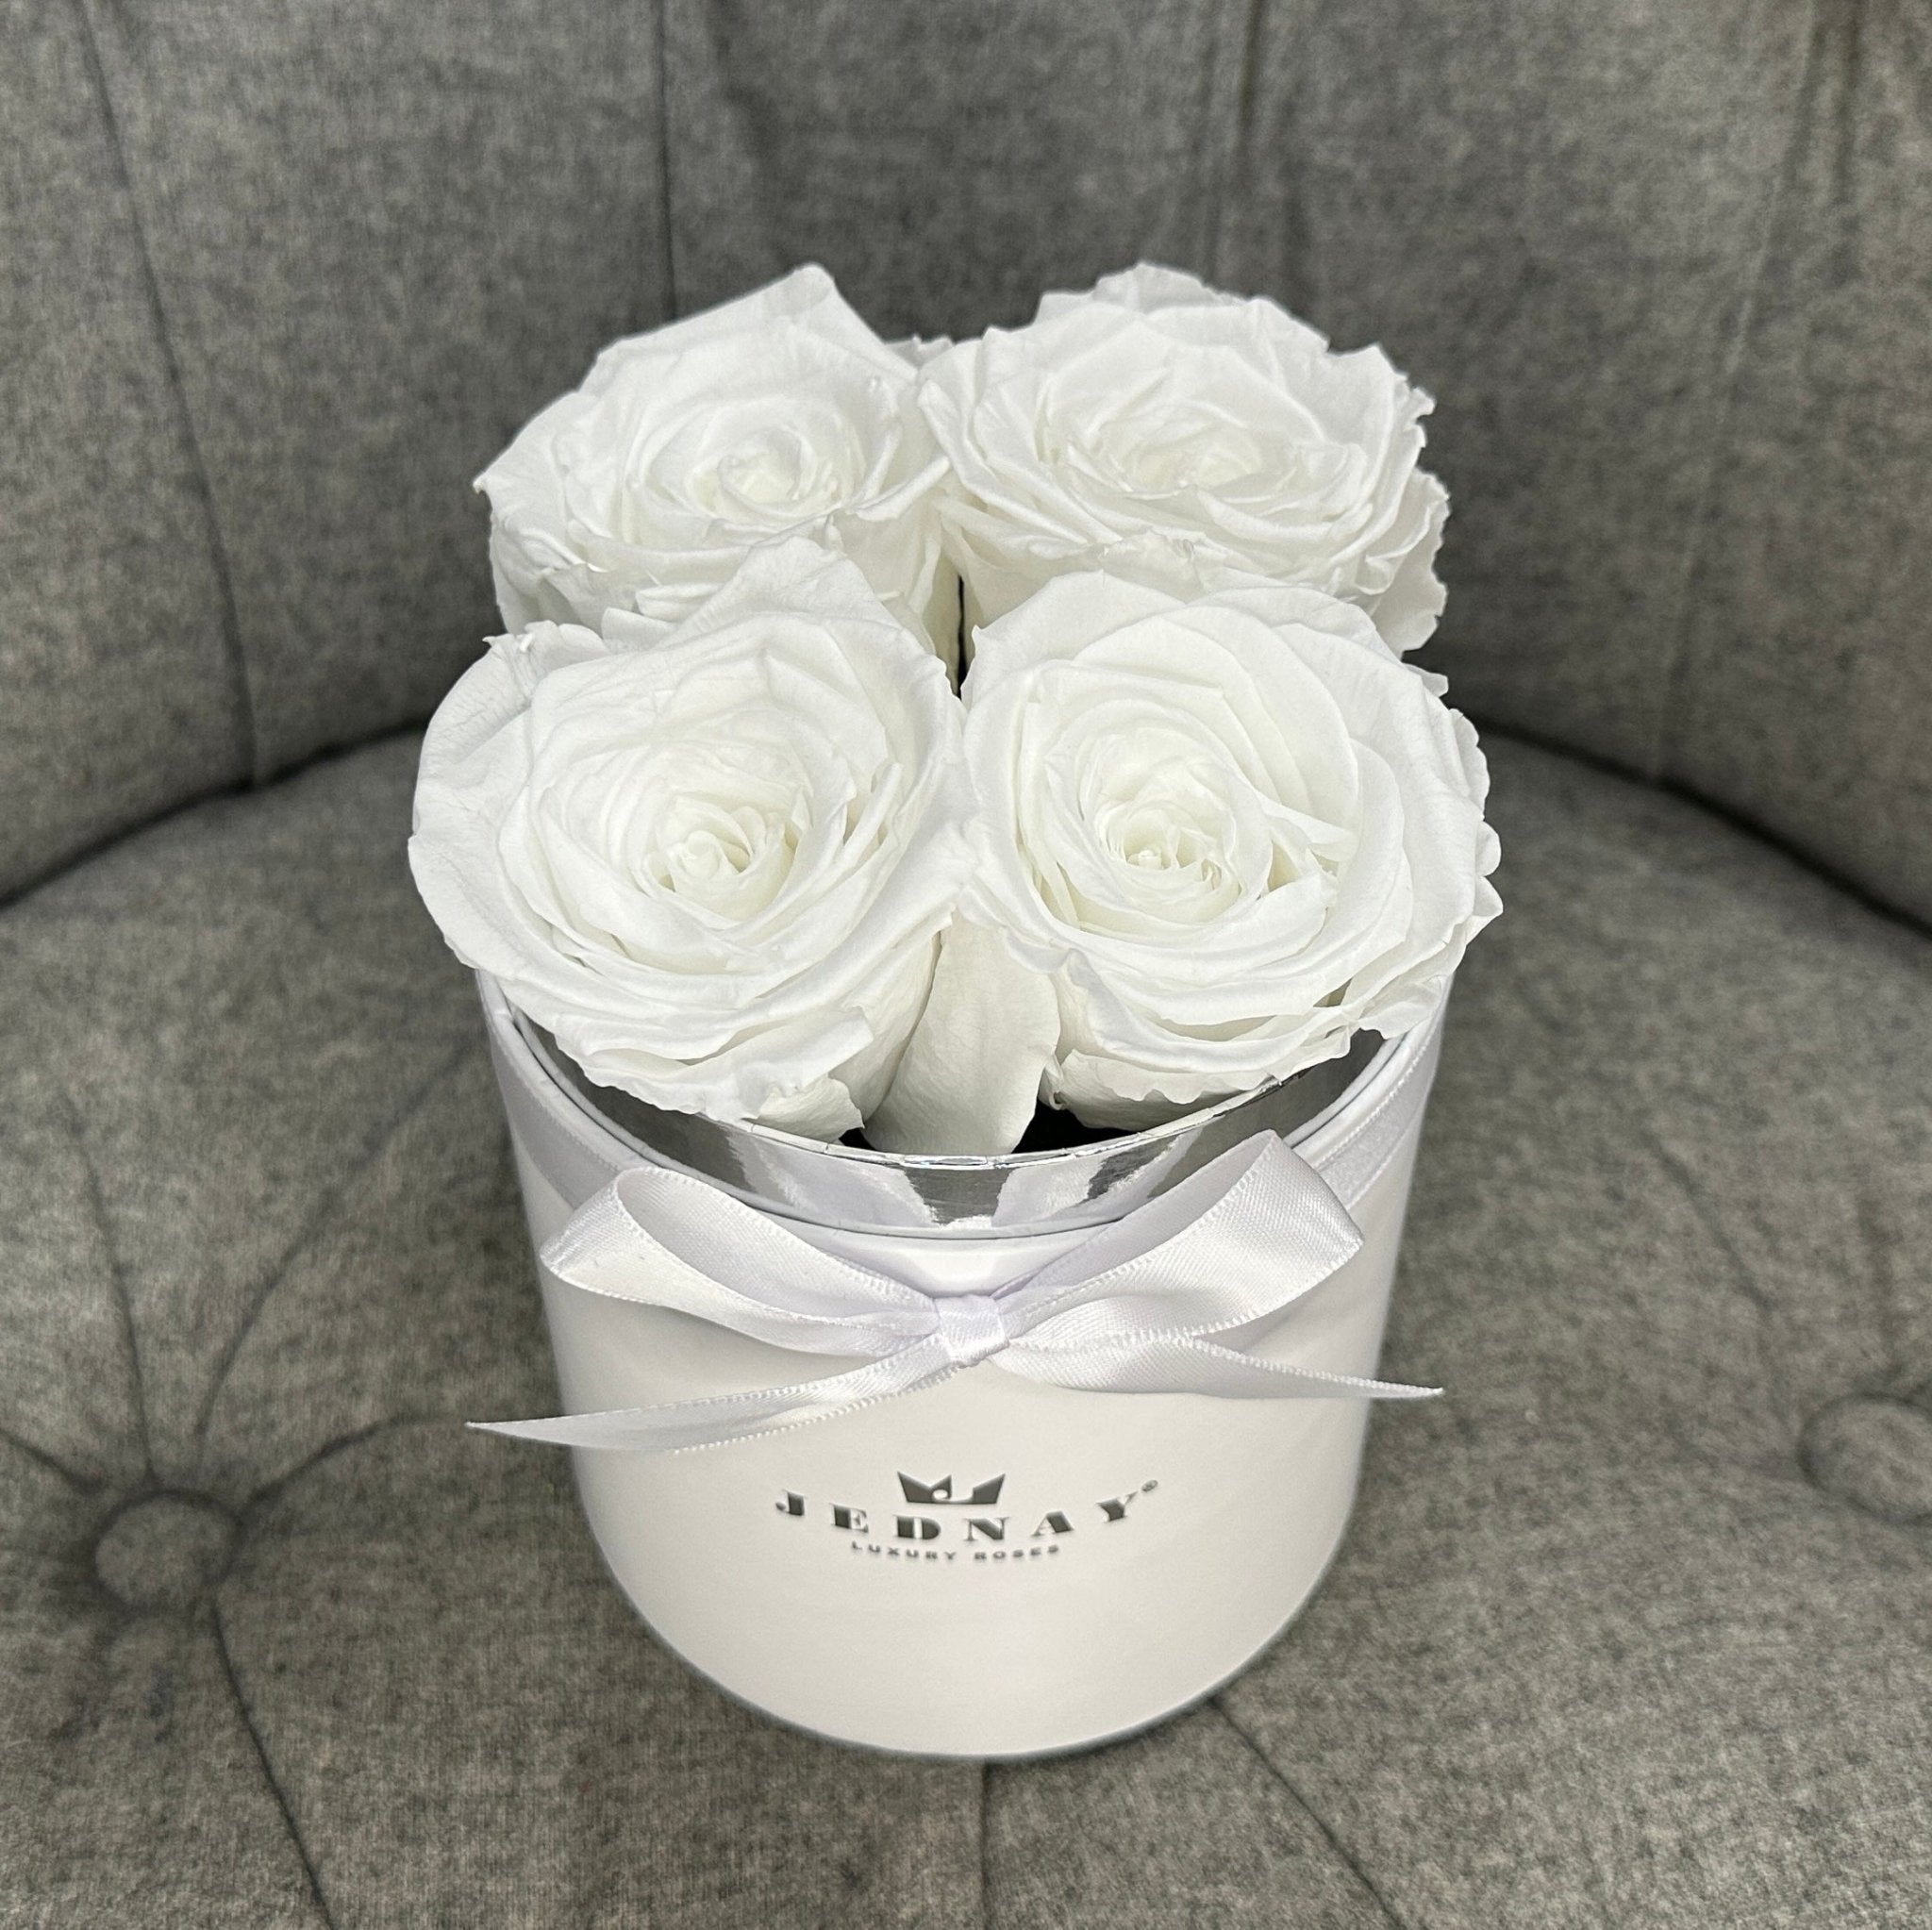 Petite Classic White Forever Rose Box - Angel White Eternal Roses - Jednay Roses